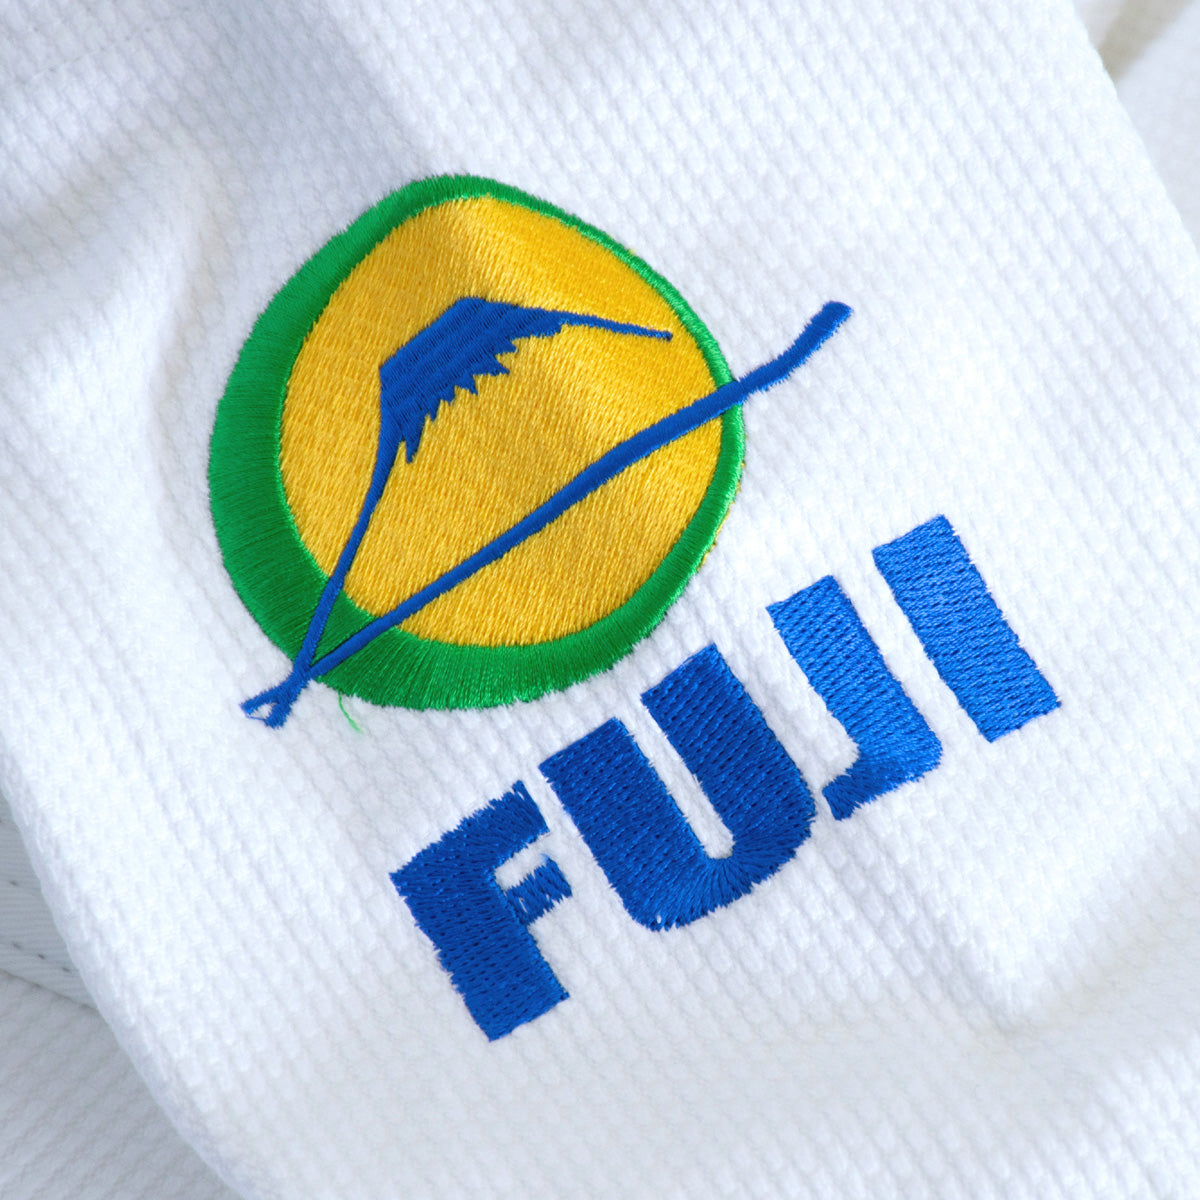 Fuji BJJ Gi - Original BJJ Uniform